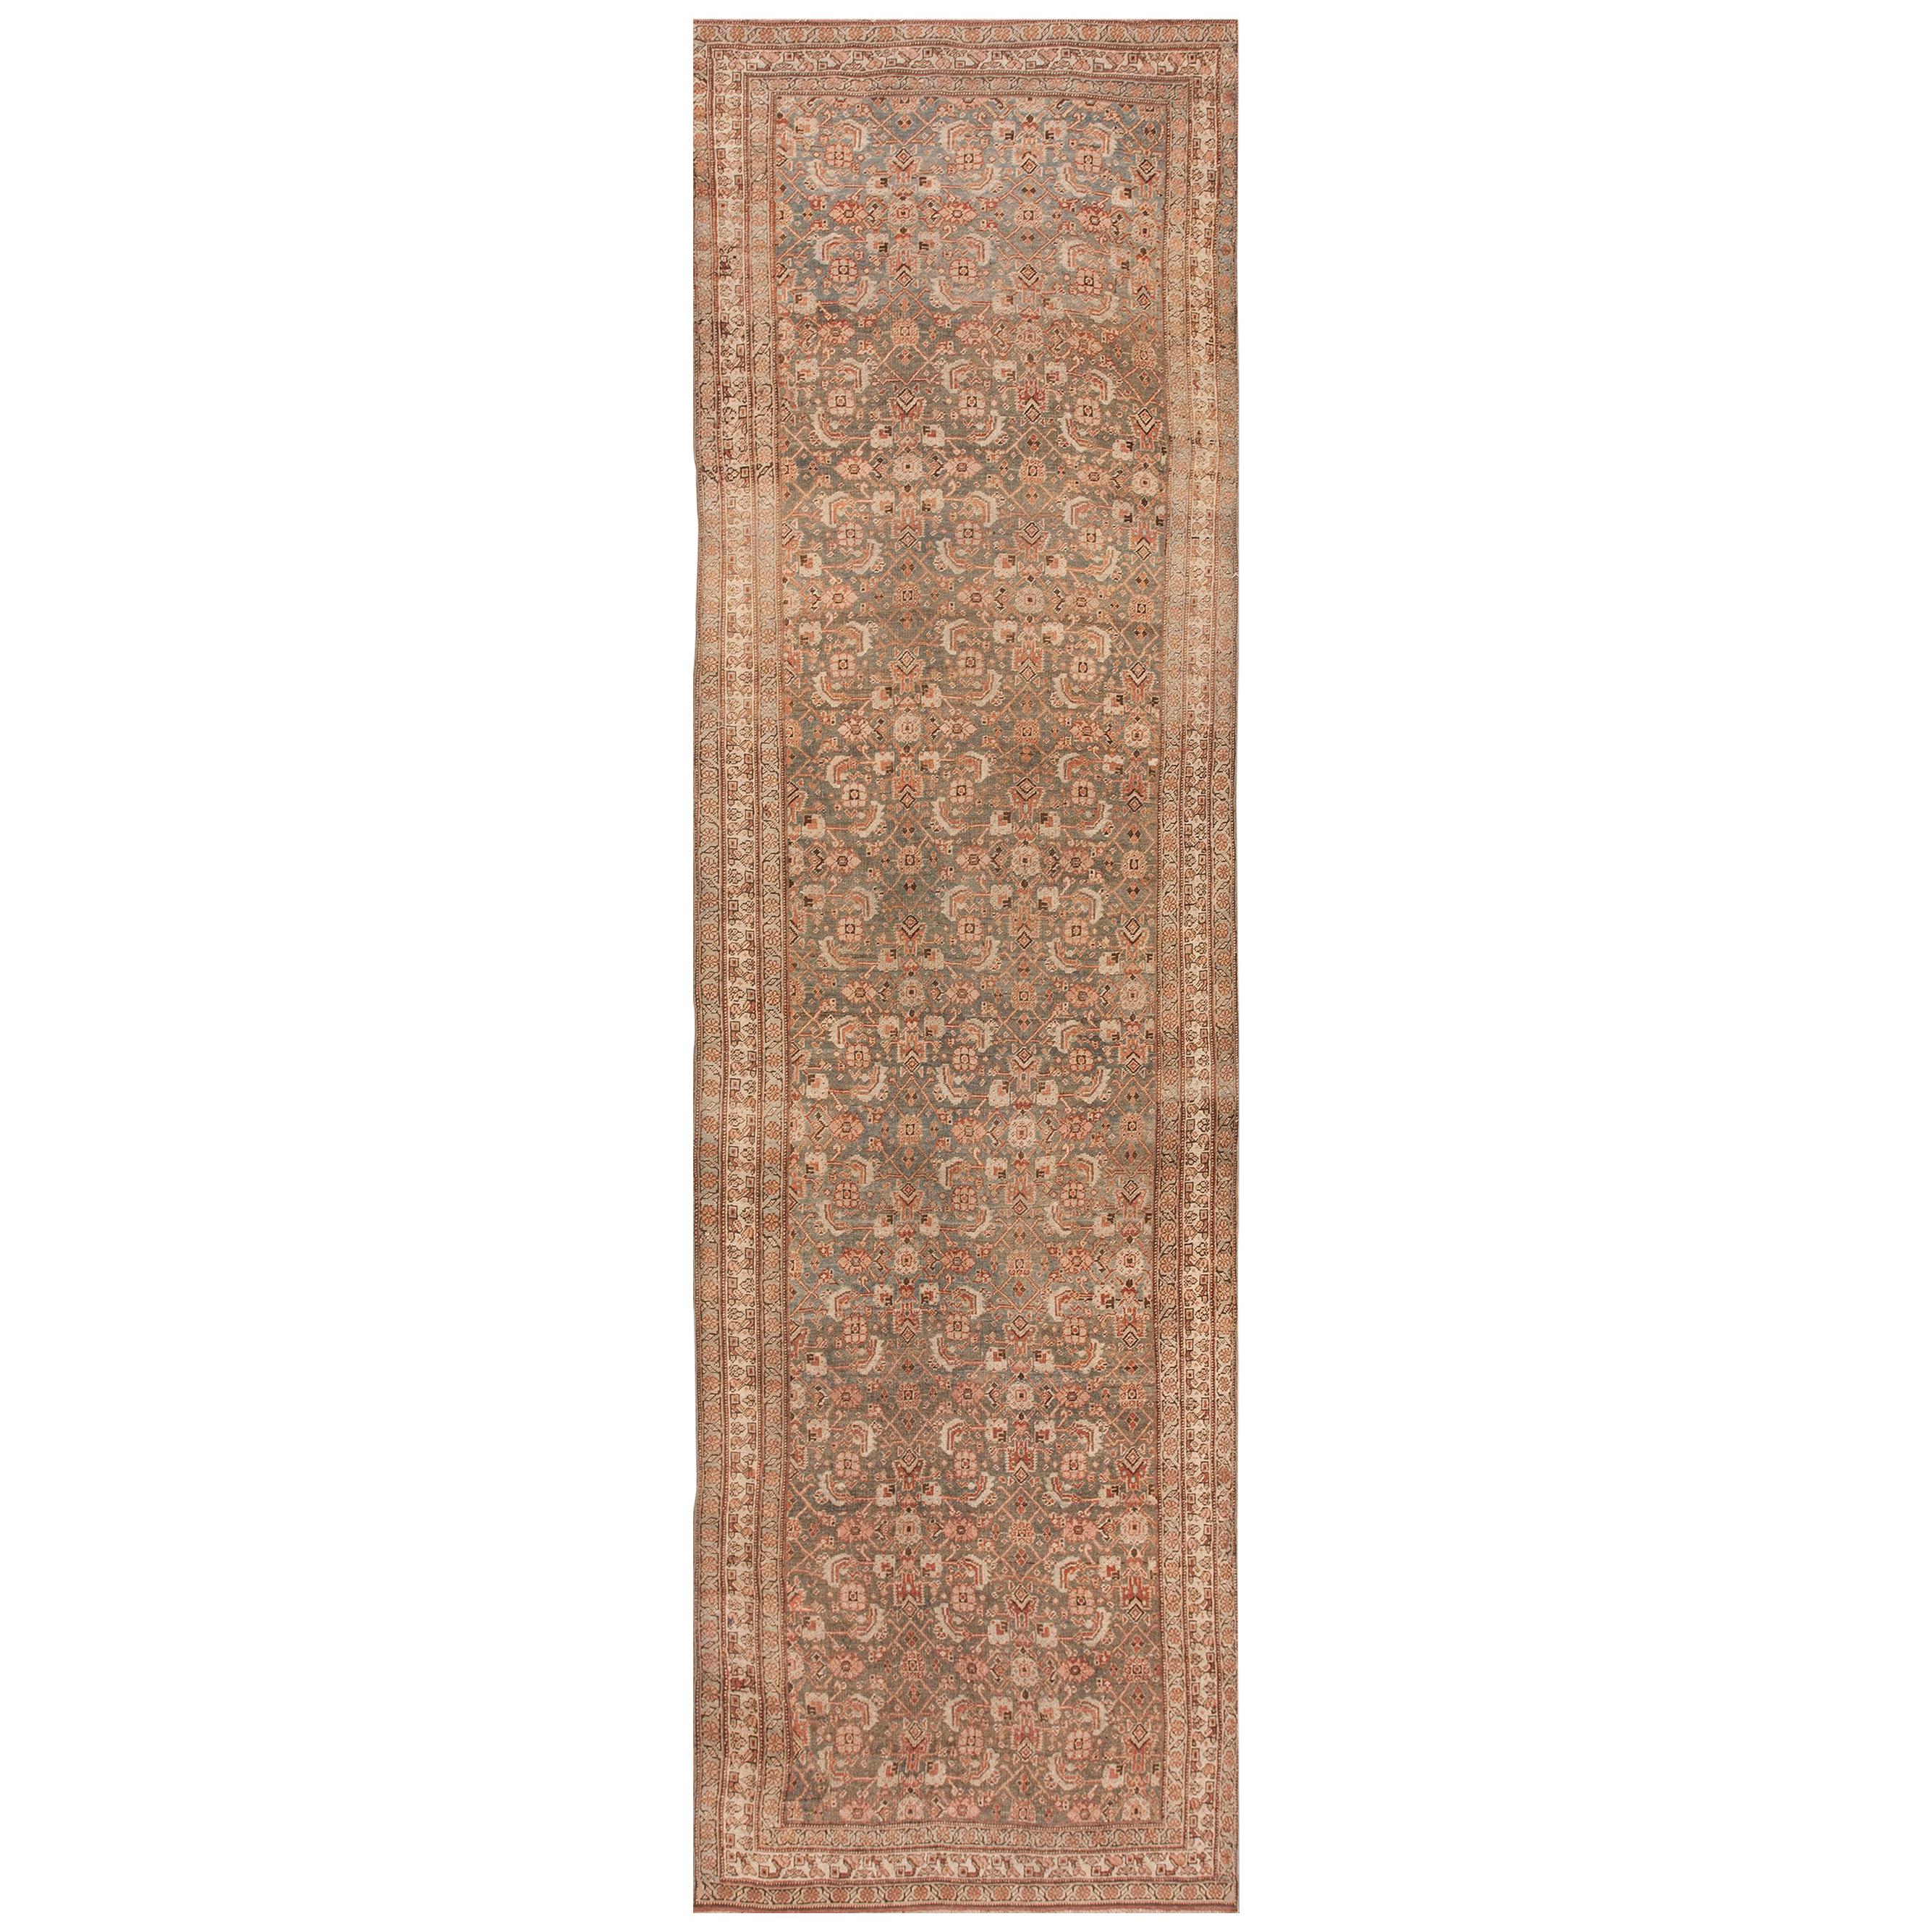 Early 20th Century Persian Bijar Carpet ( 4' 2" x 14' 8" - 127 x 447 cm )